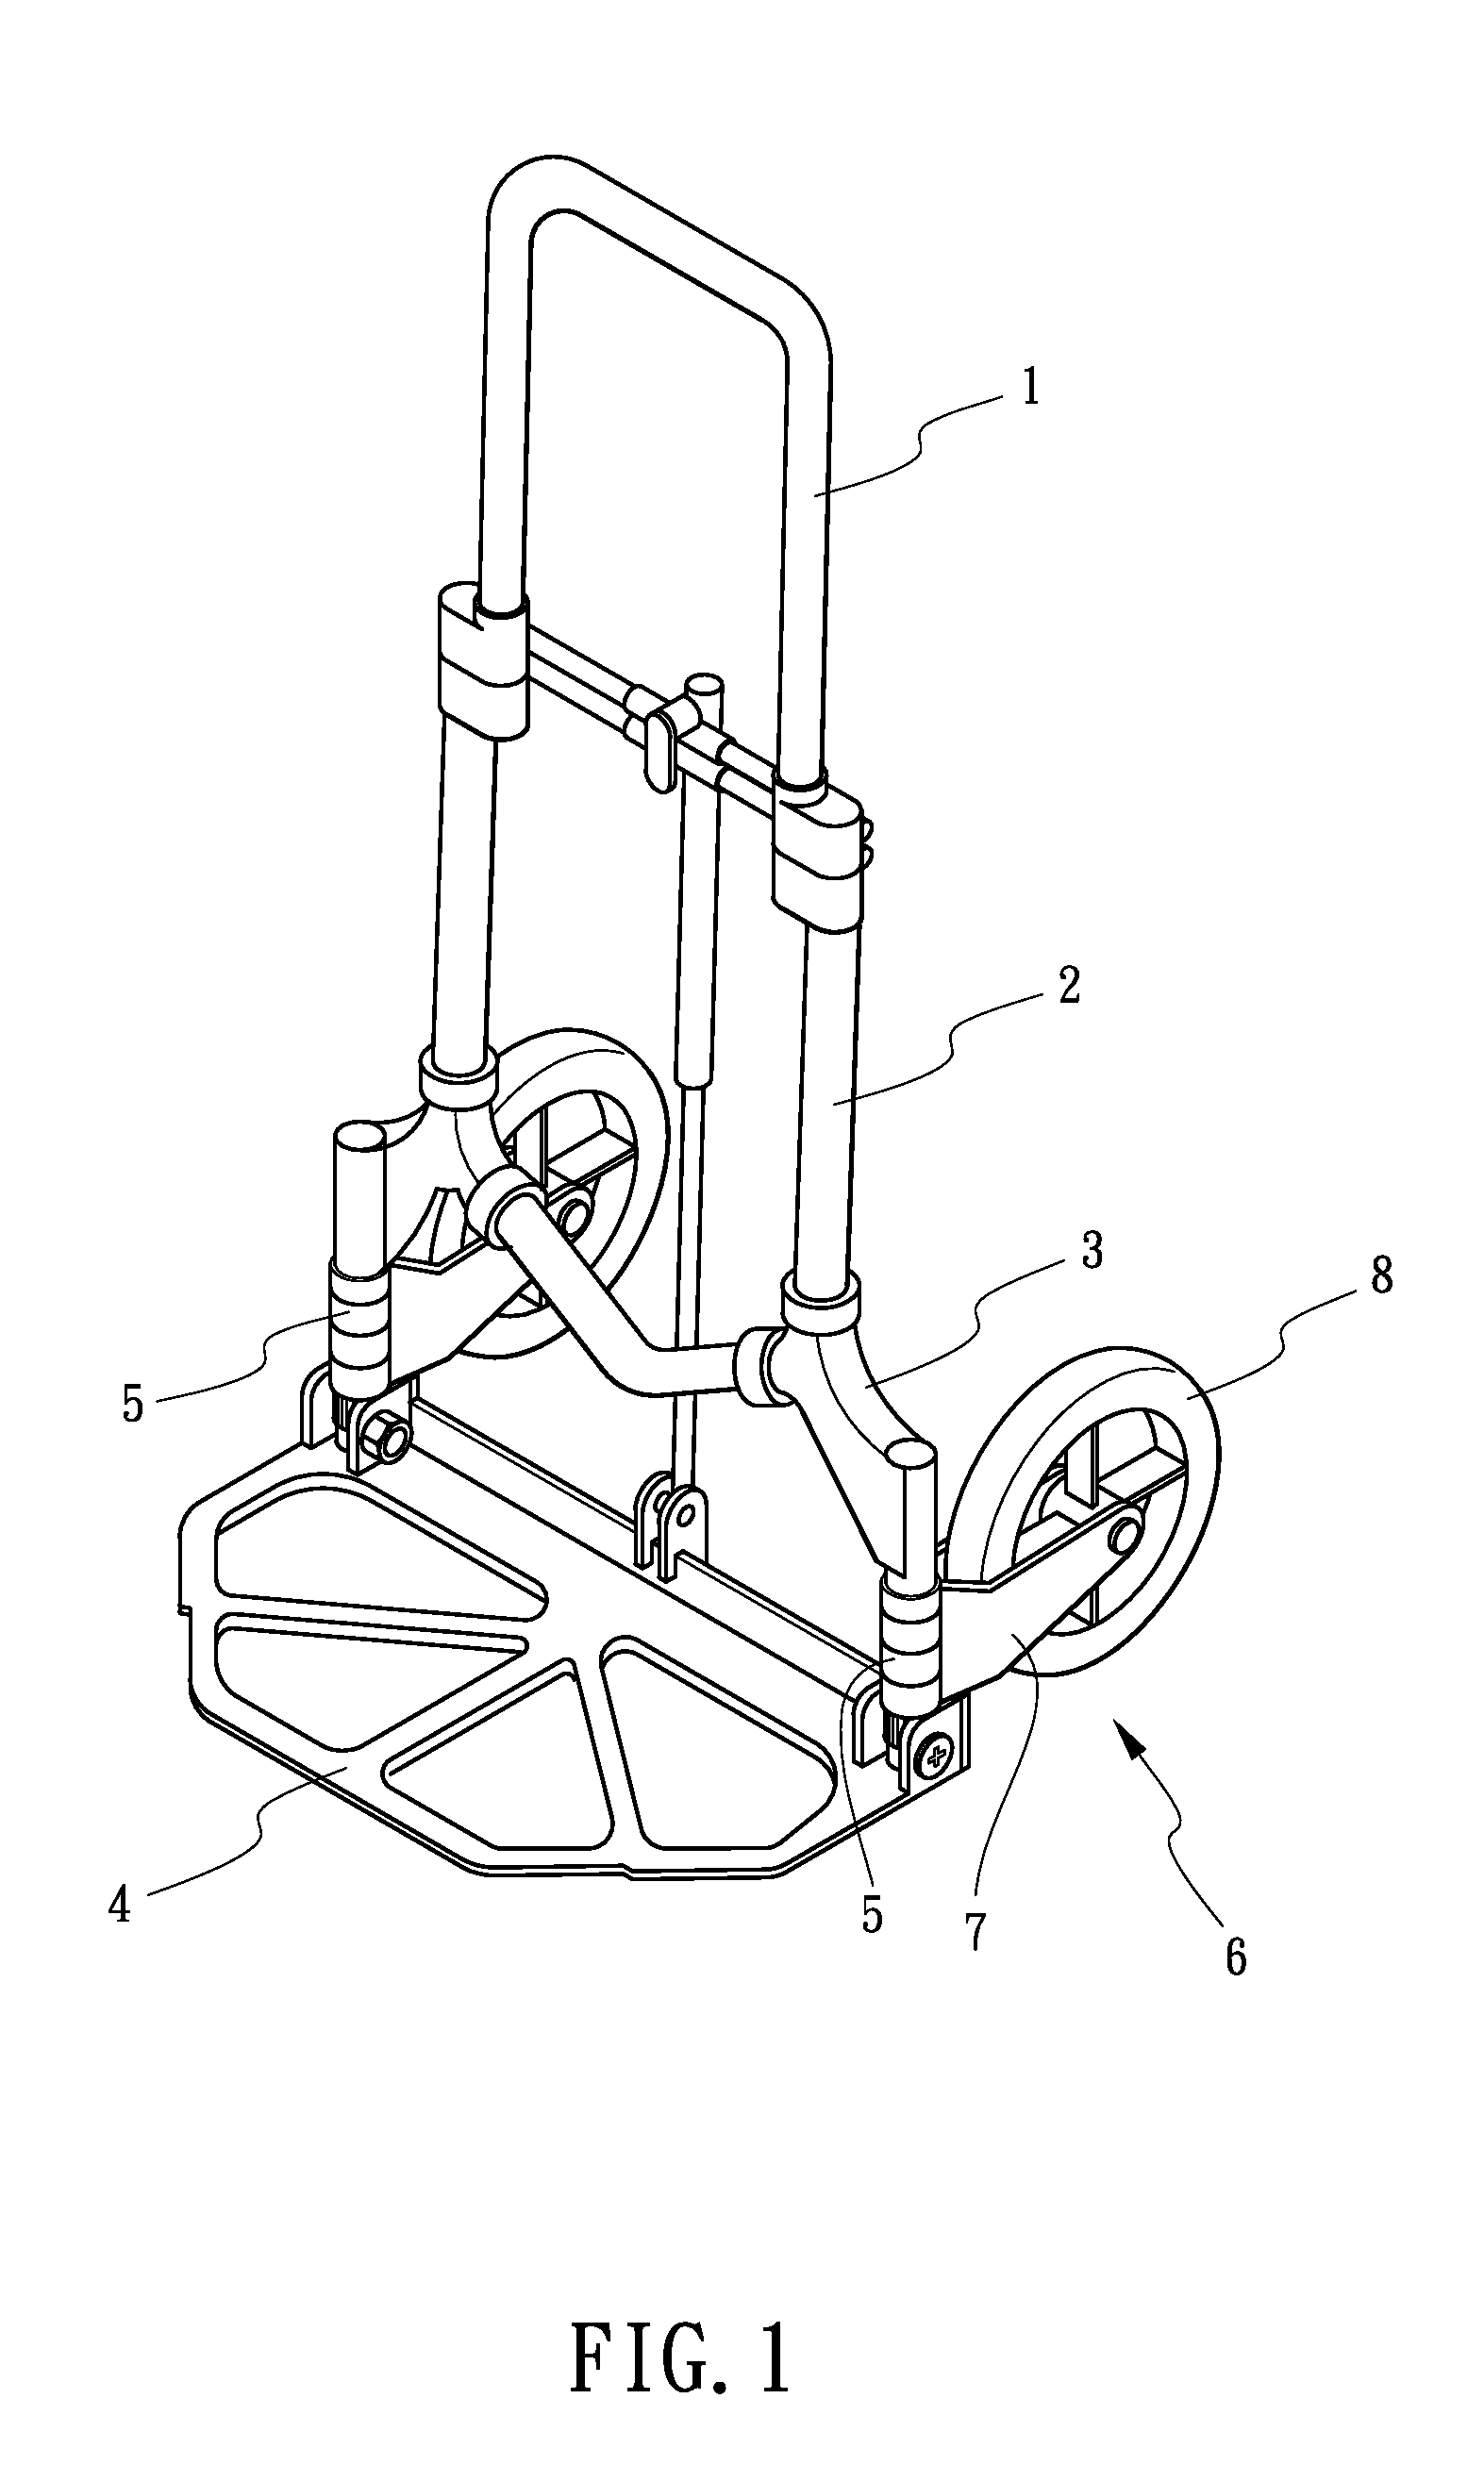 Foldable handcart